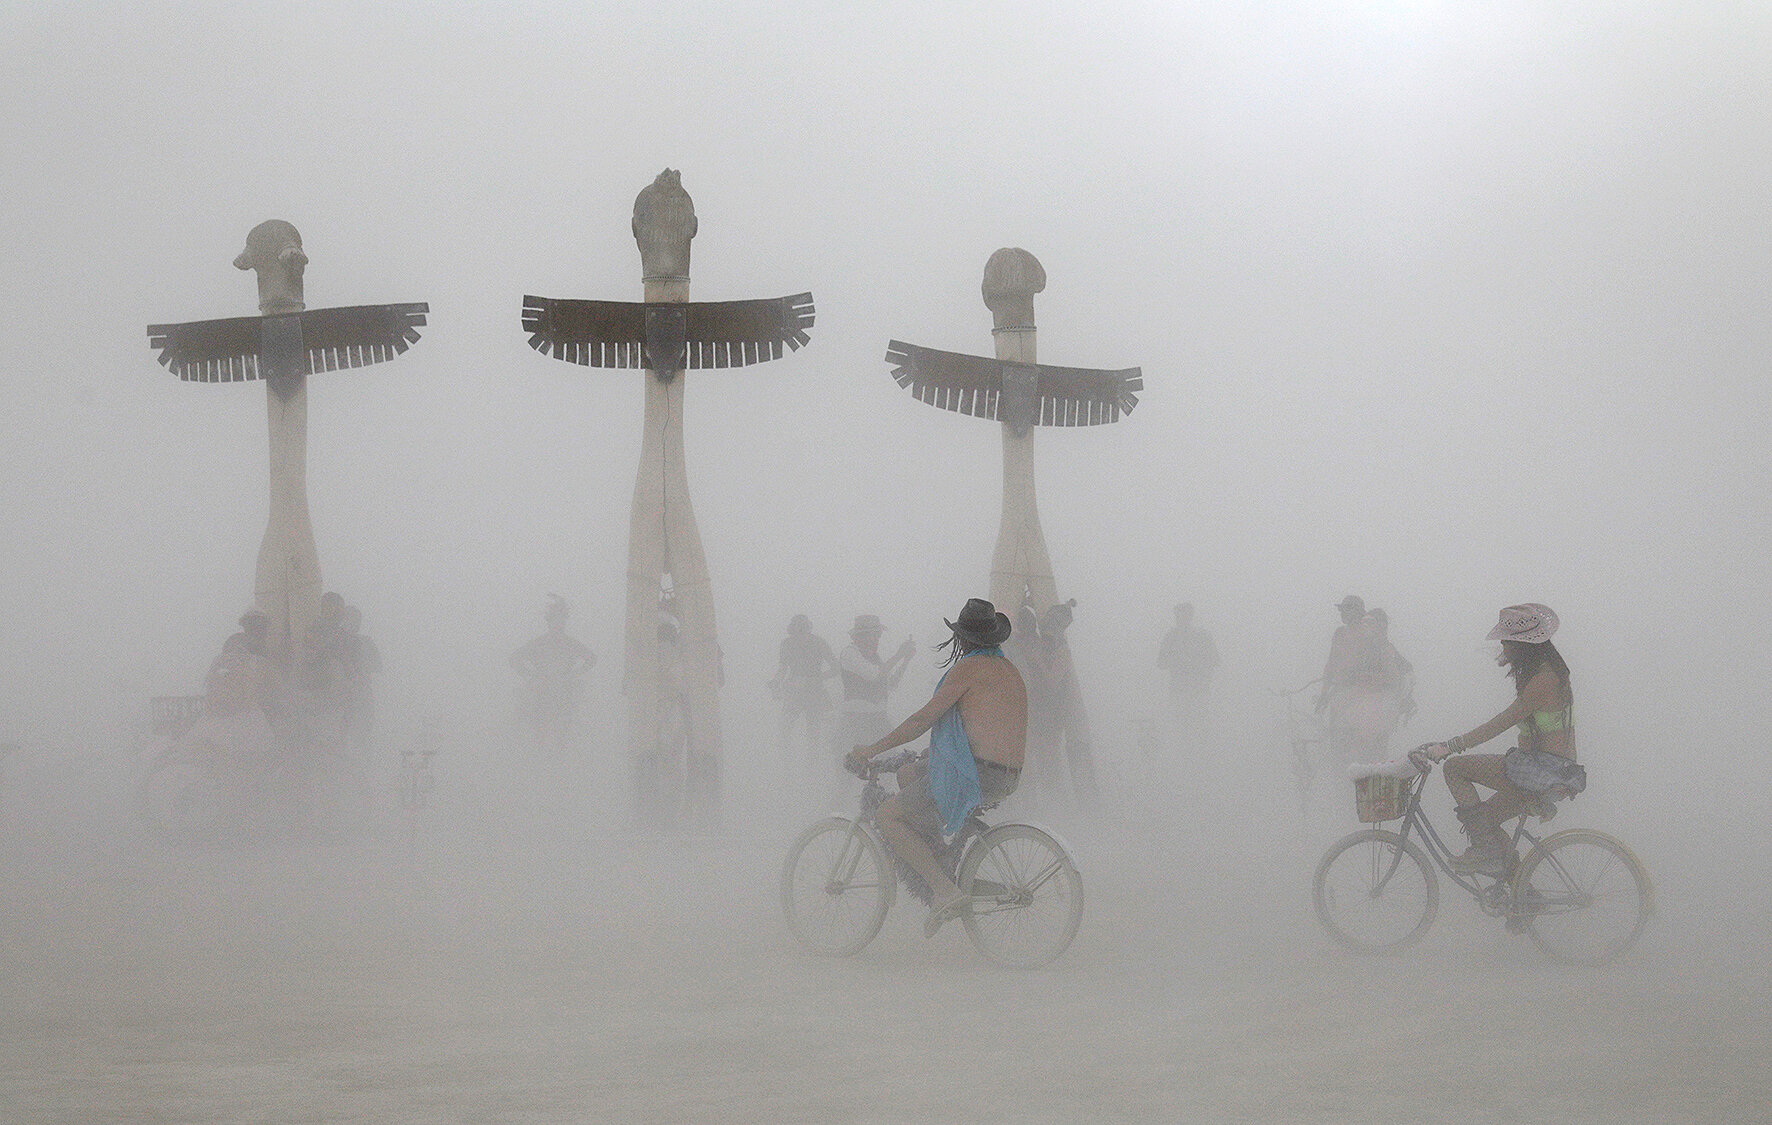 <p>Участники фестиваля на велосипедах проезжают мимо арт-проекта Джеймса Тайлера &laquo;Буревестники&raquo;&nbsp;во время песчаной бури</p>